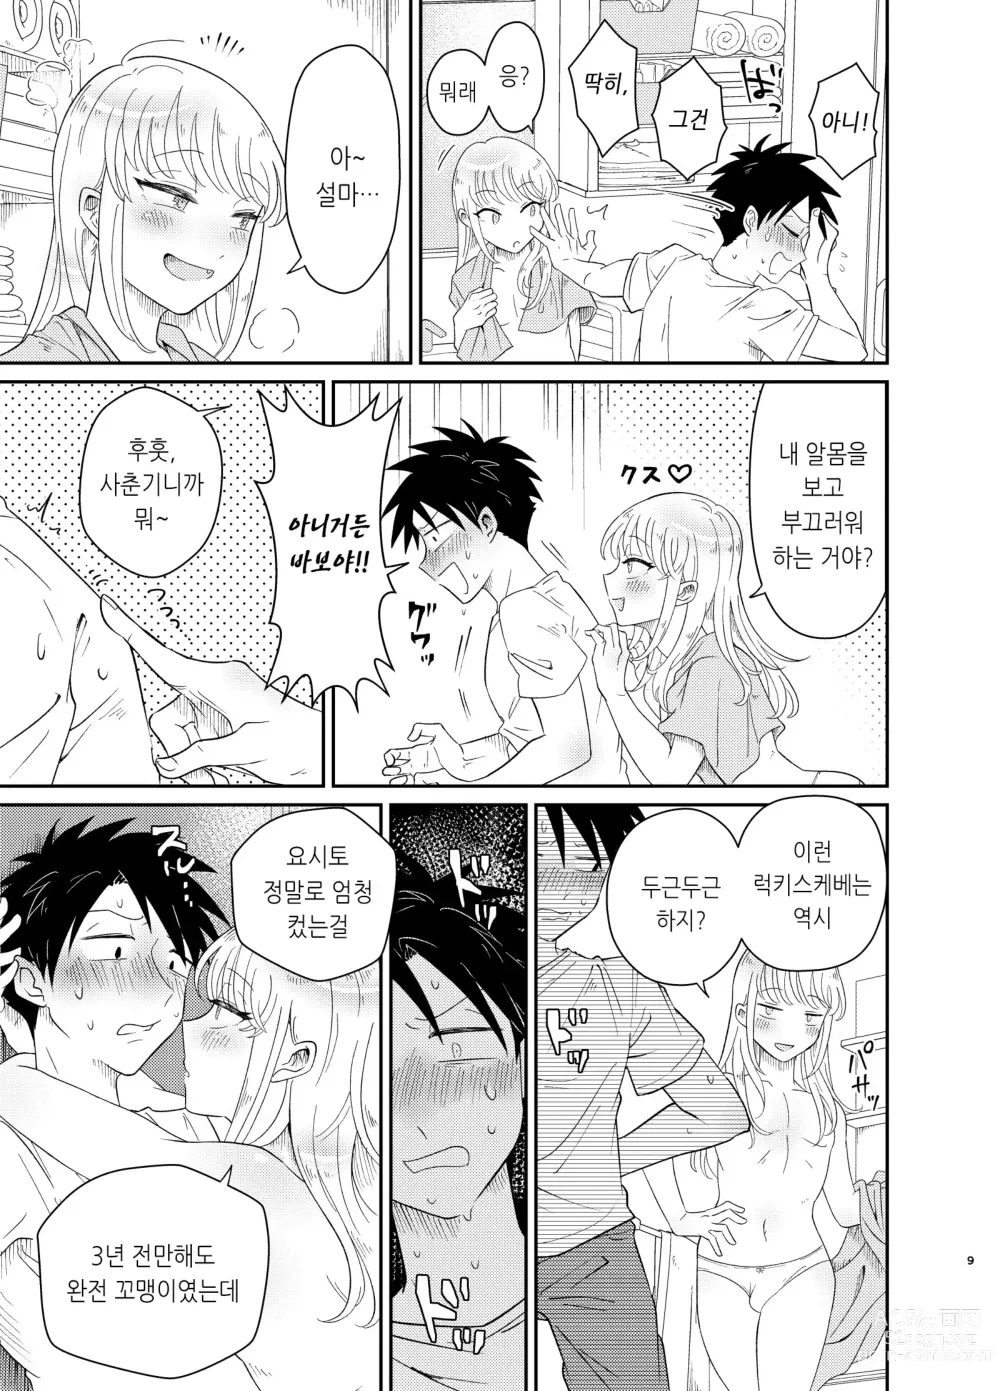 Page 9 of doujinshi 엄청 귀엽고 야한 사촌은 좋아하세요?